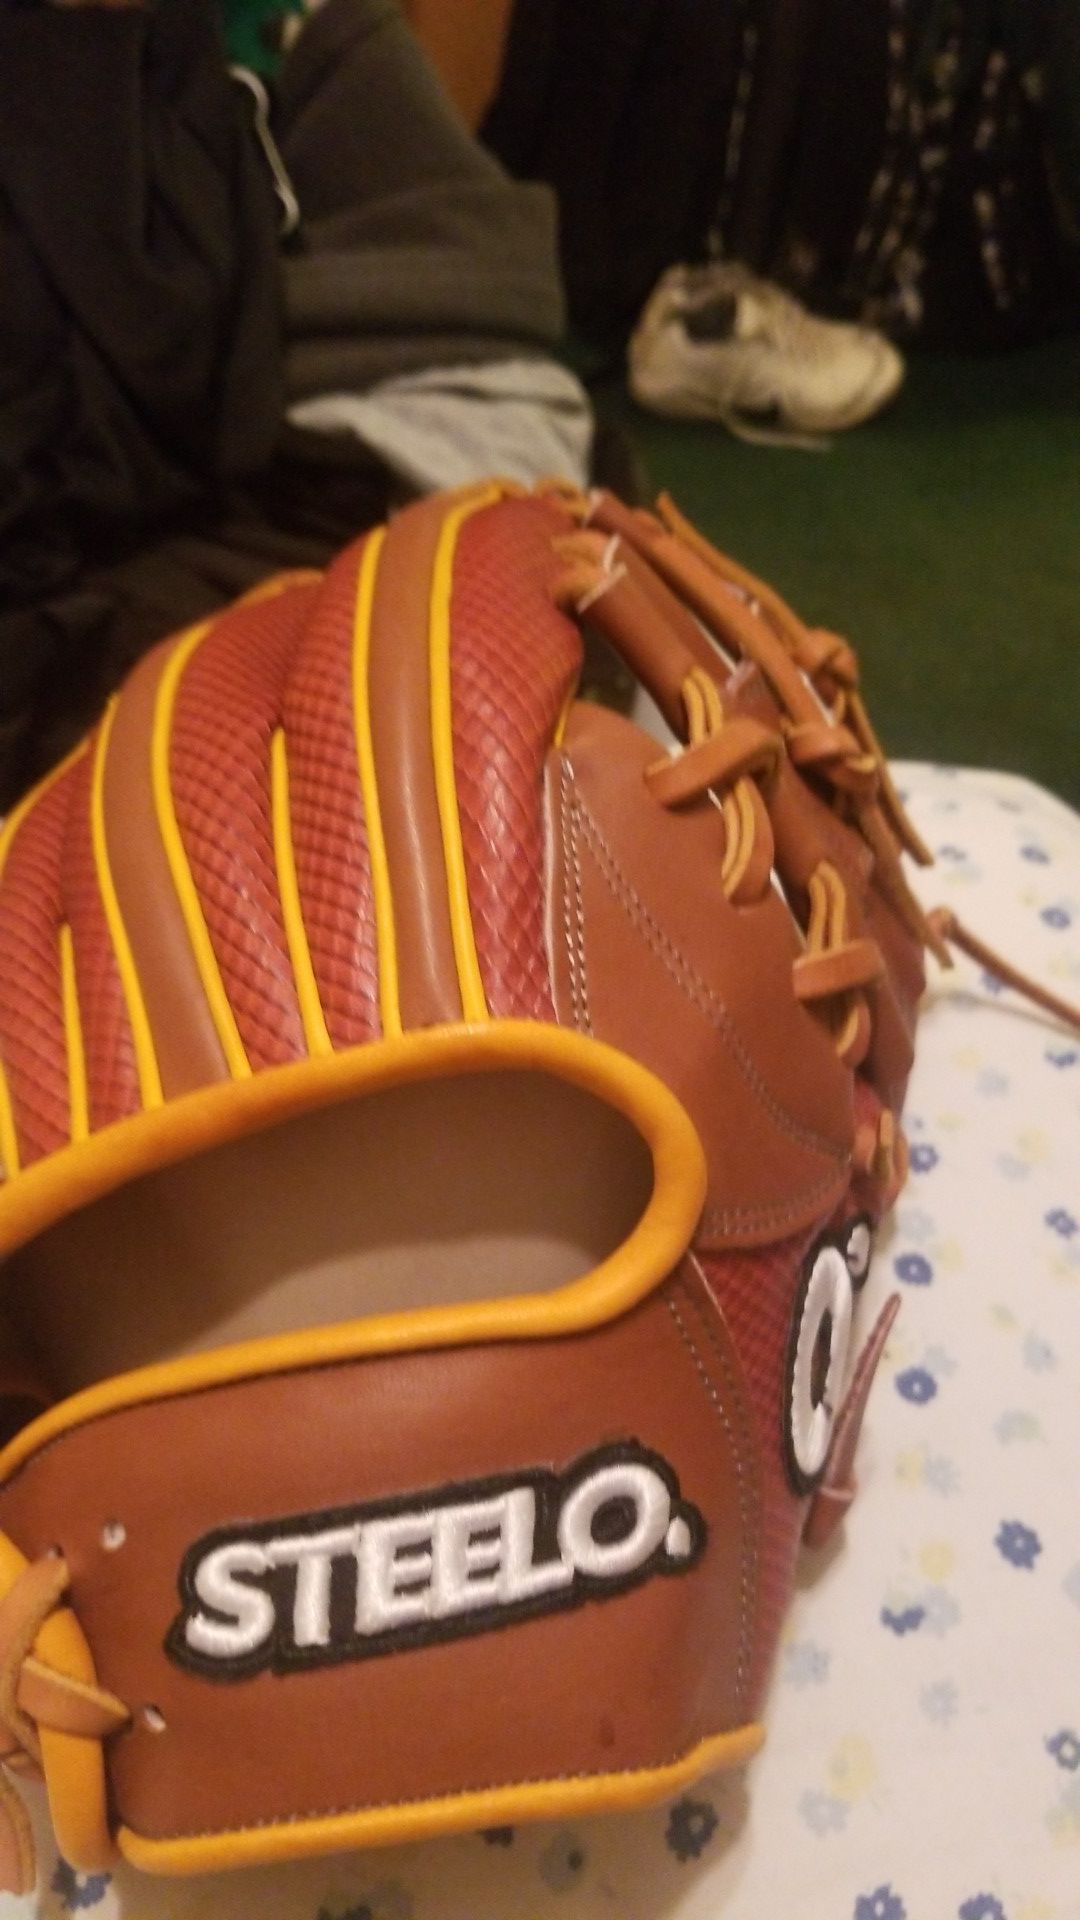 Steelo Baseball Glove